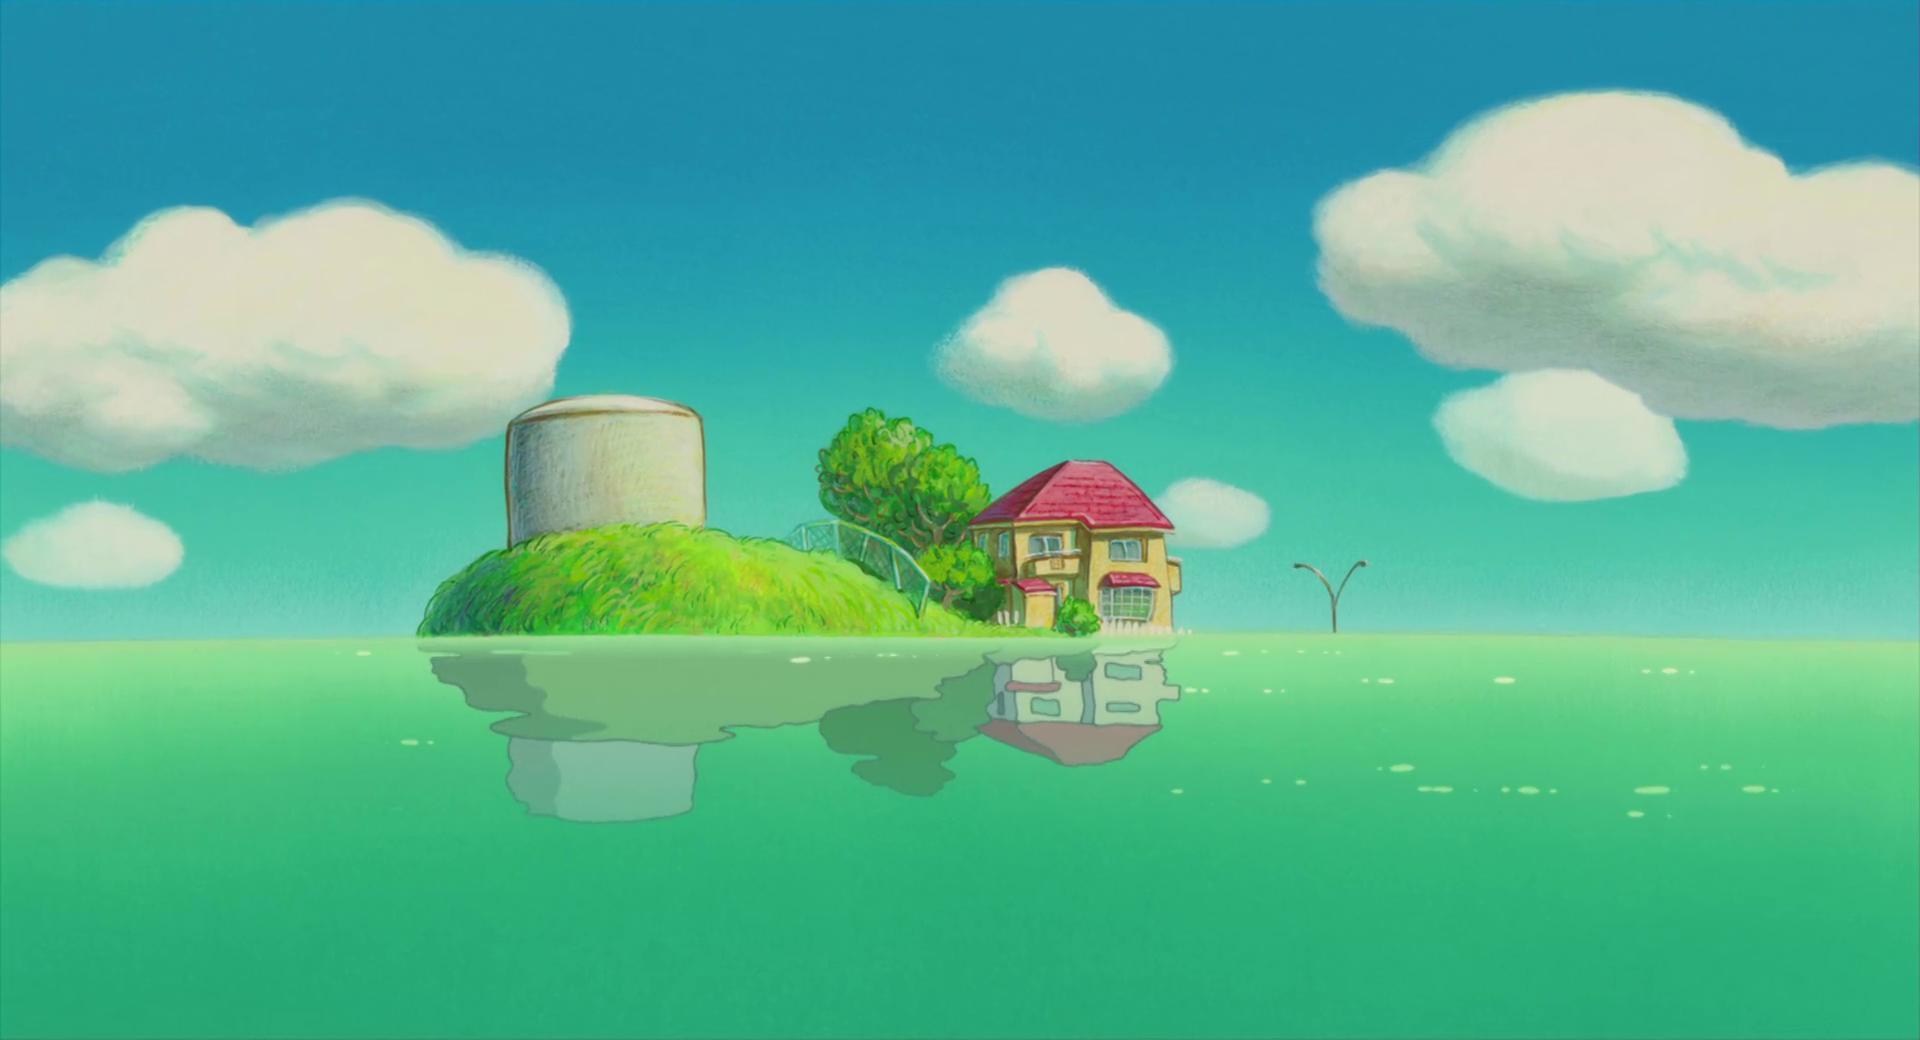 Kotaku of beautiful background art from Studio Ghibli's movies. In case you need new wallpaper